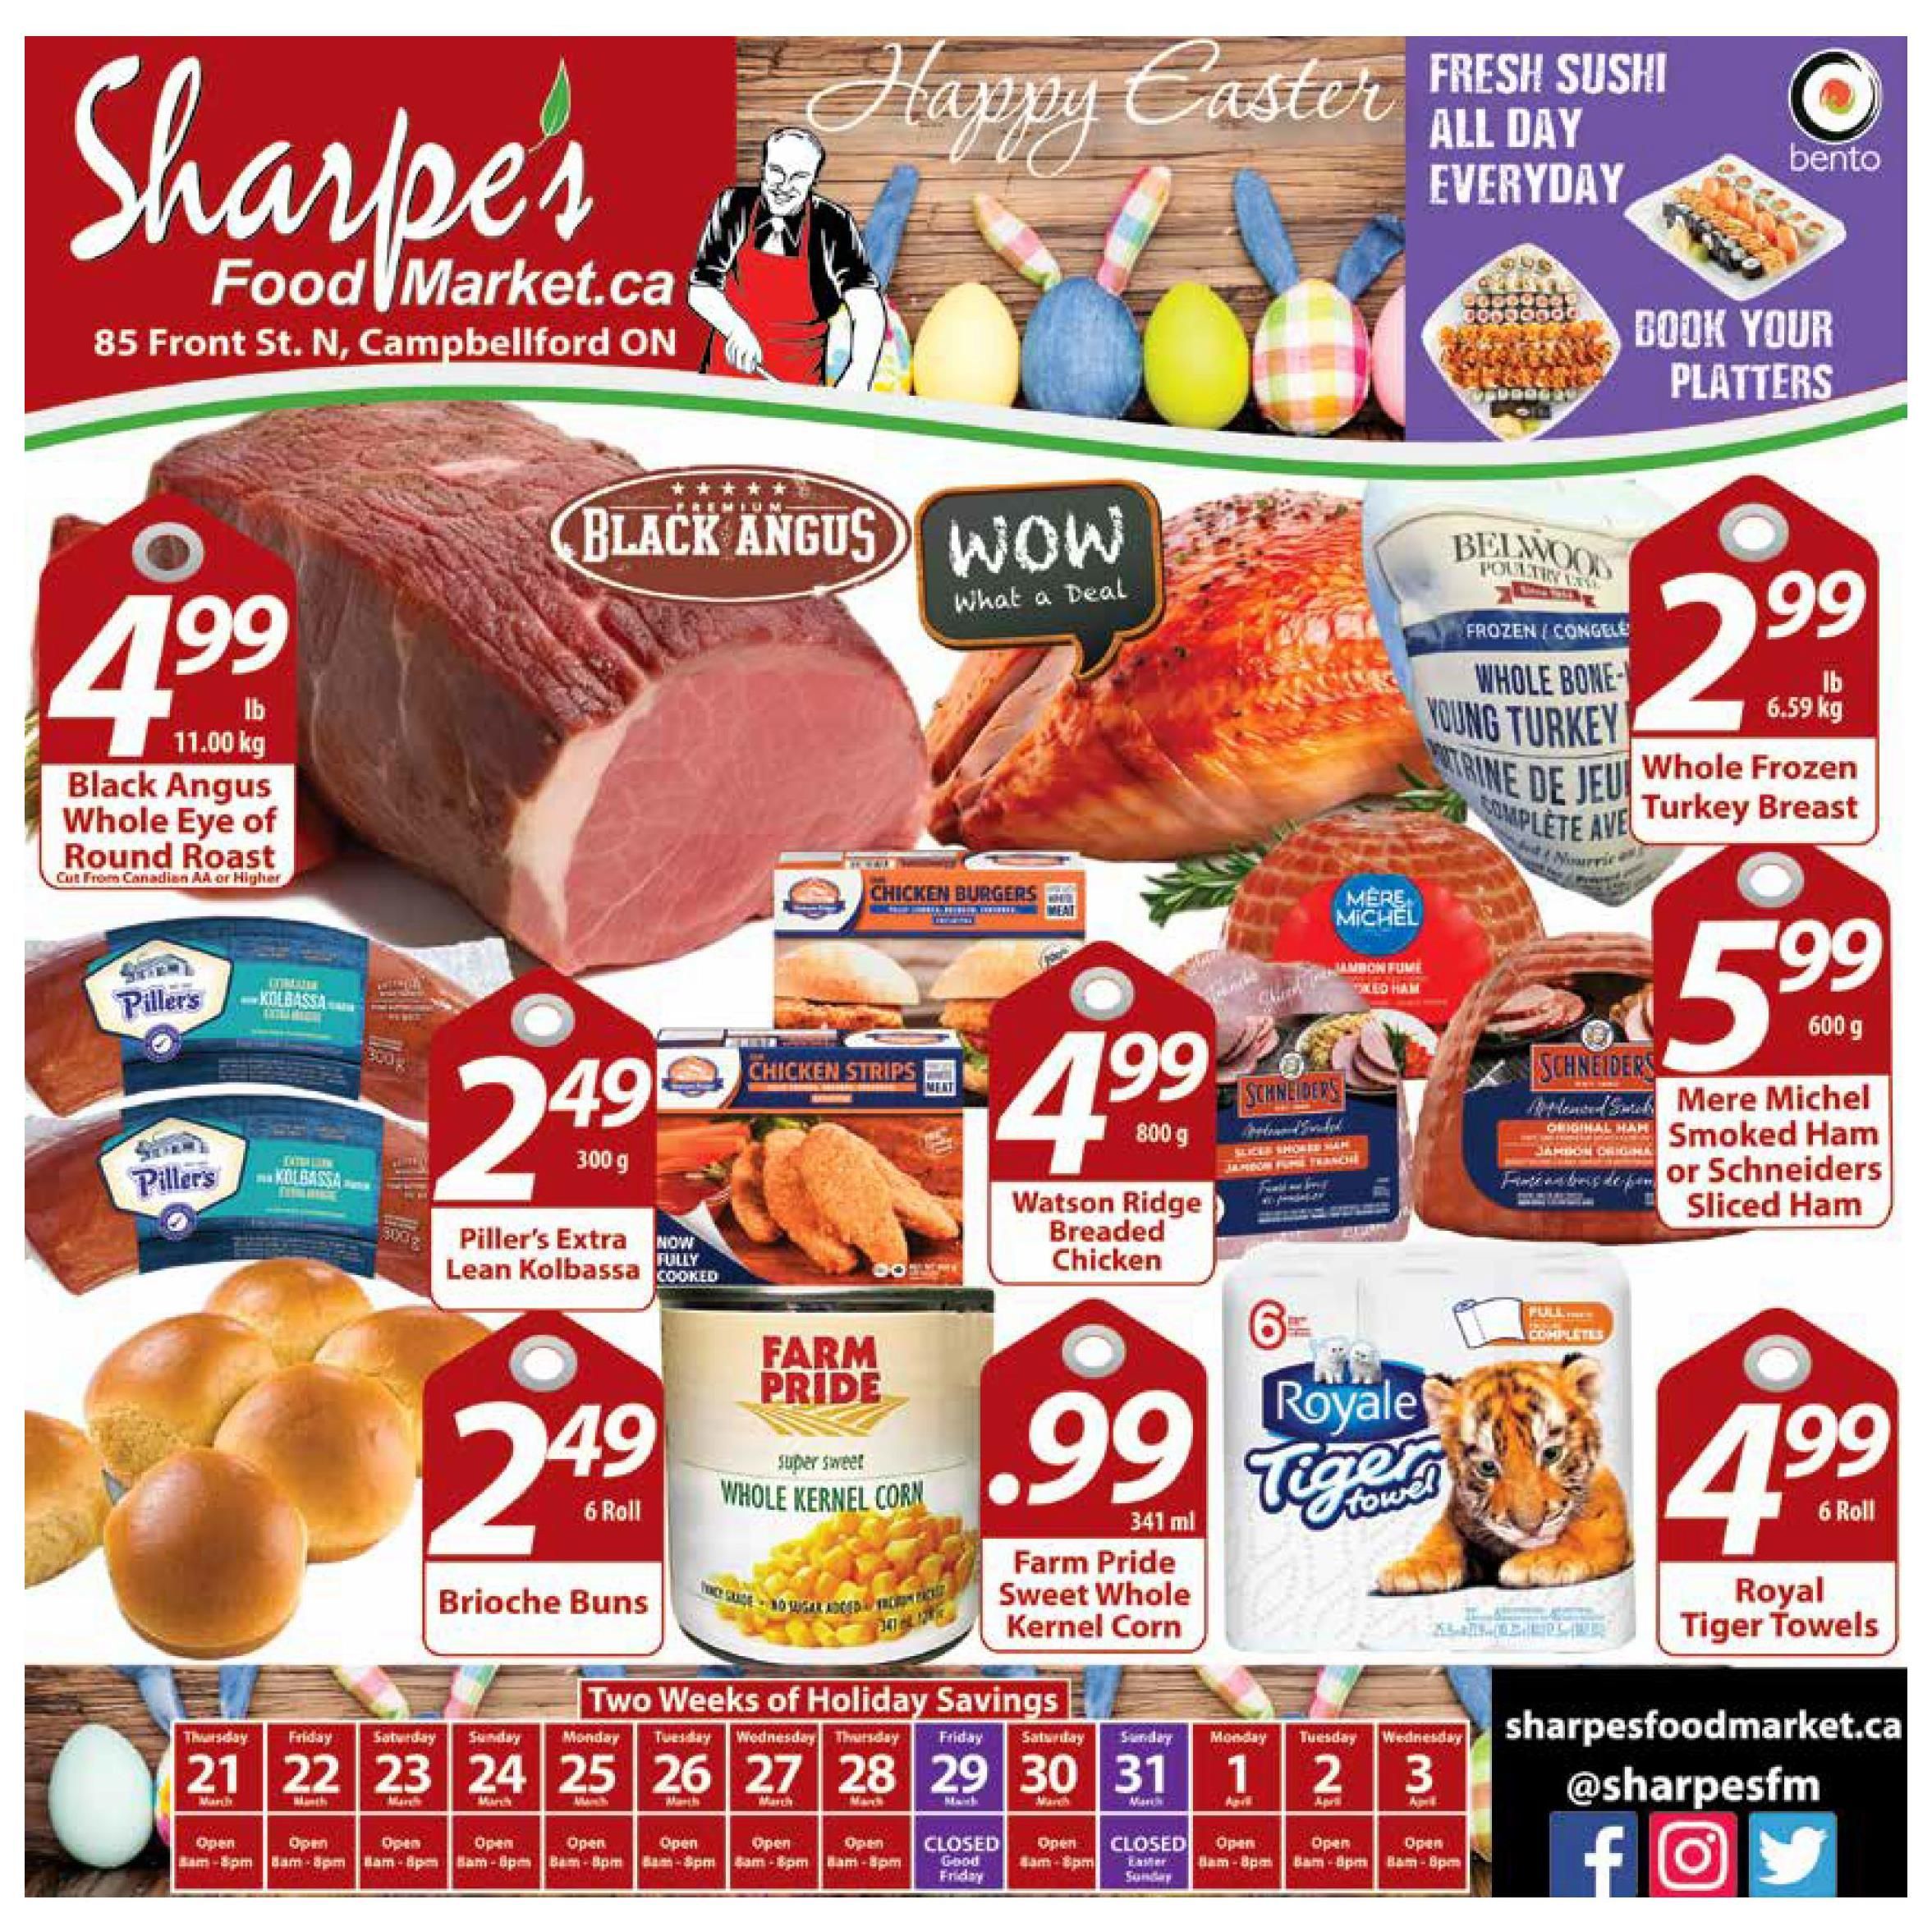 Sharpe’s Food Market - 2 Weeks of Savings